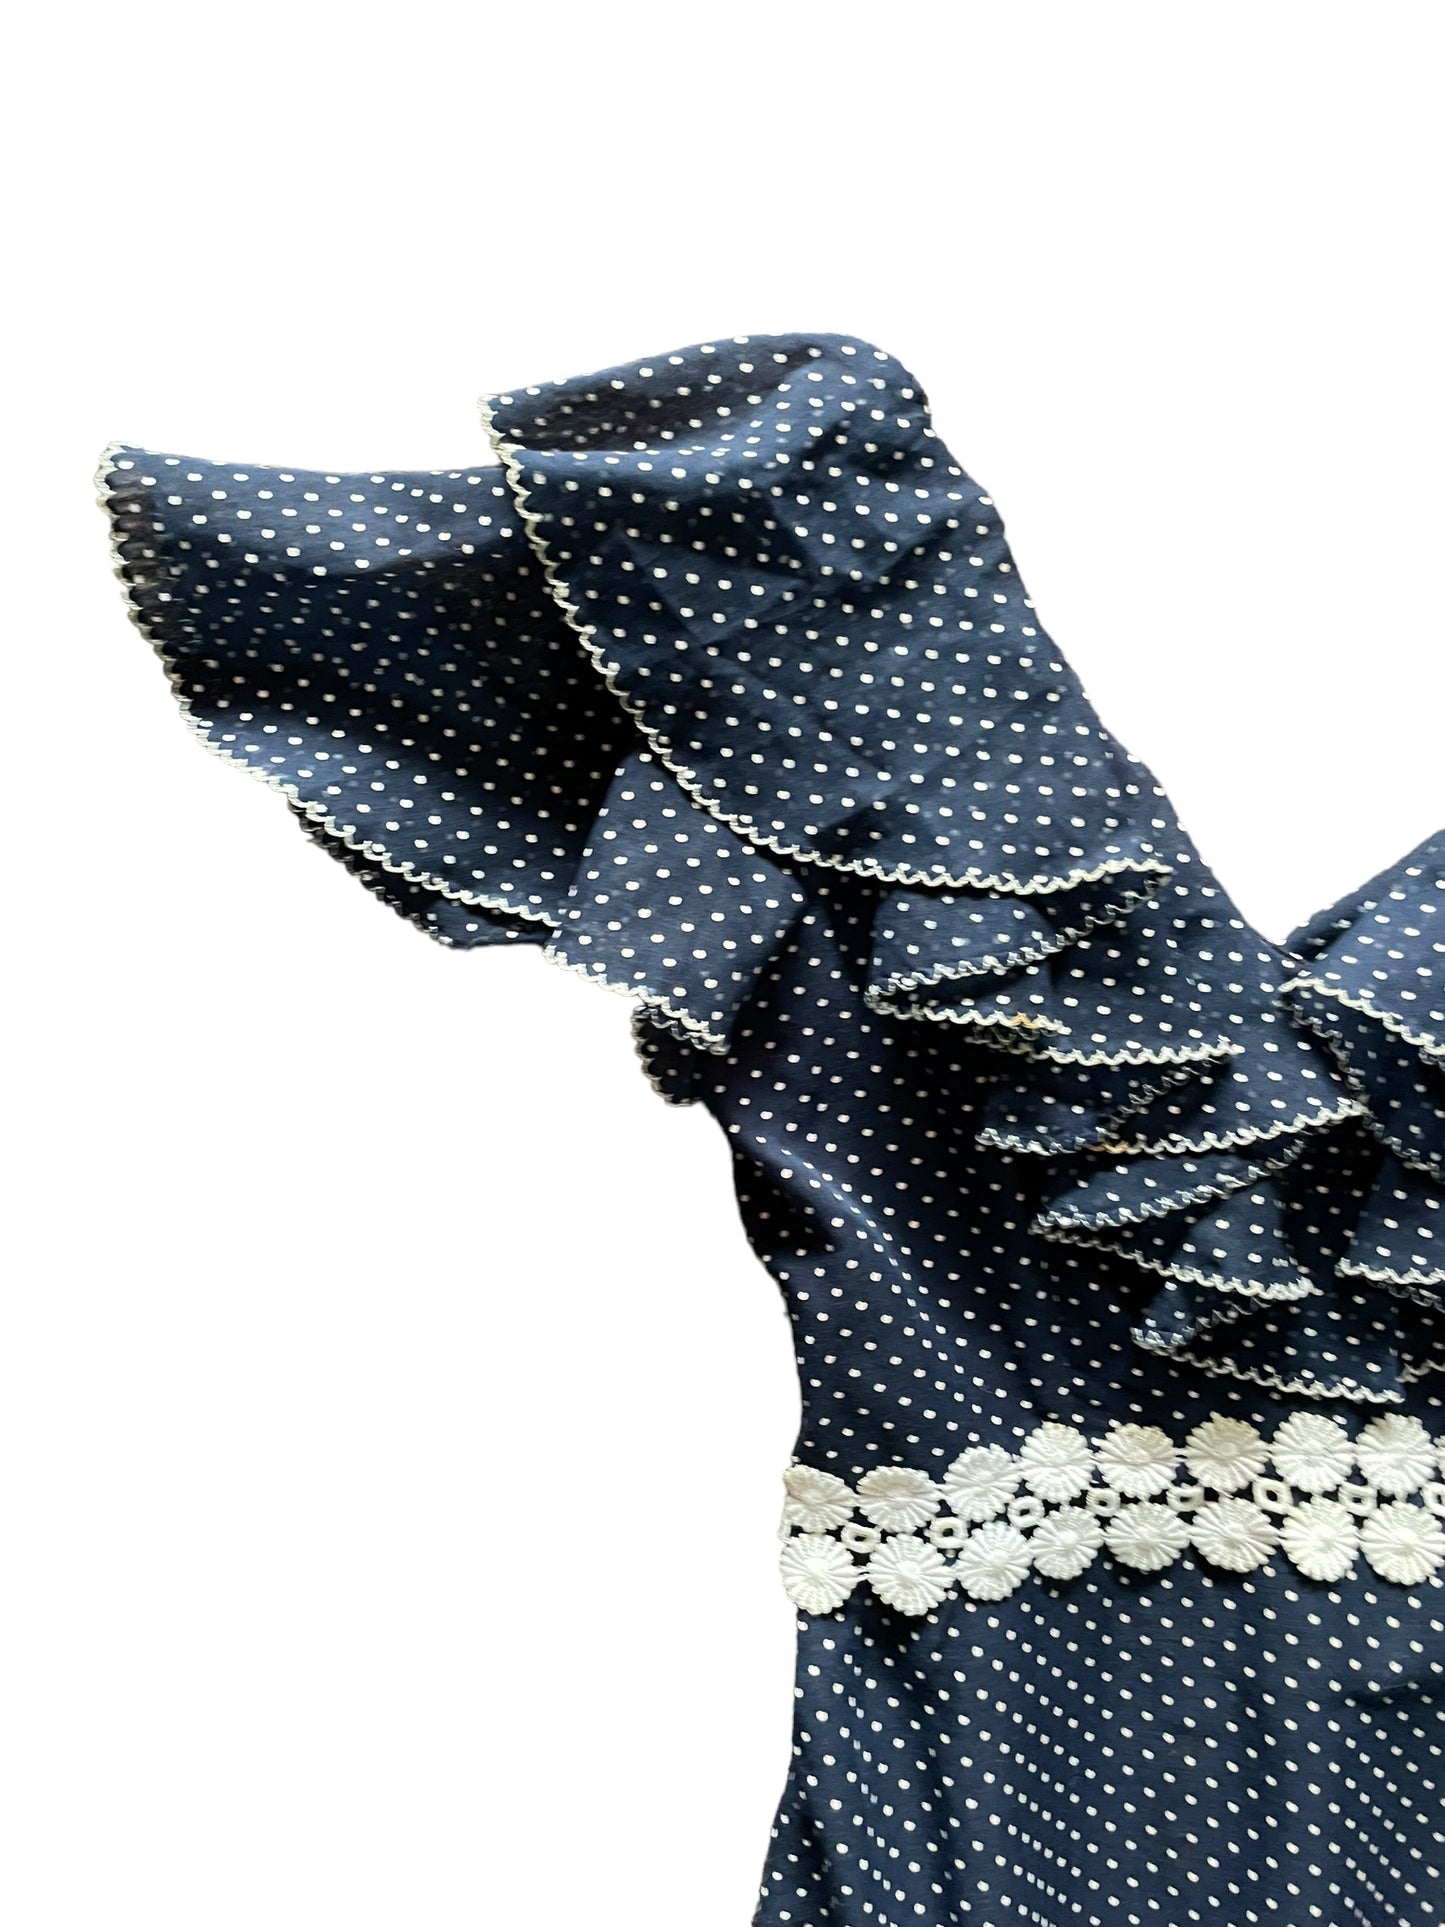 Right shoulder view of Vintage 1970s Navy Blue Swiss Dot Maxi Dress SZ S |  Barn Owl Vintage Dresses | Seattle True Vintage